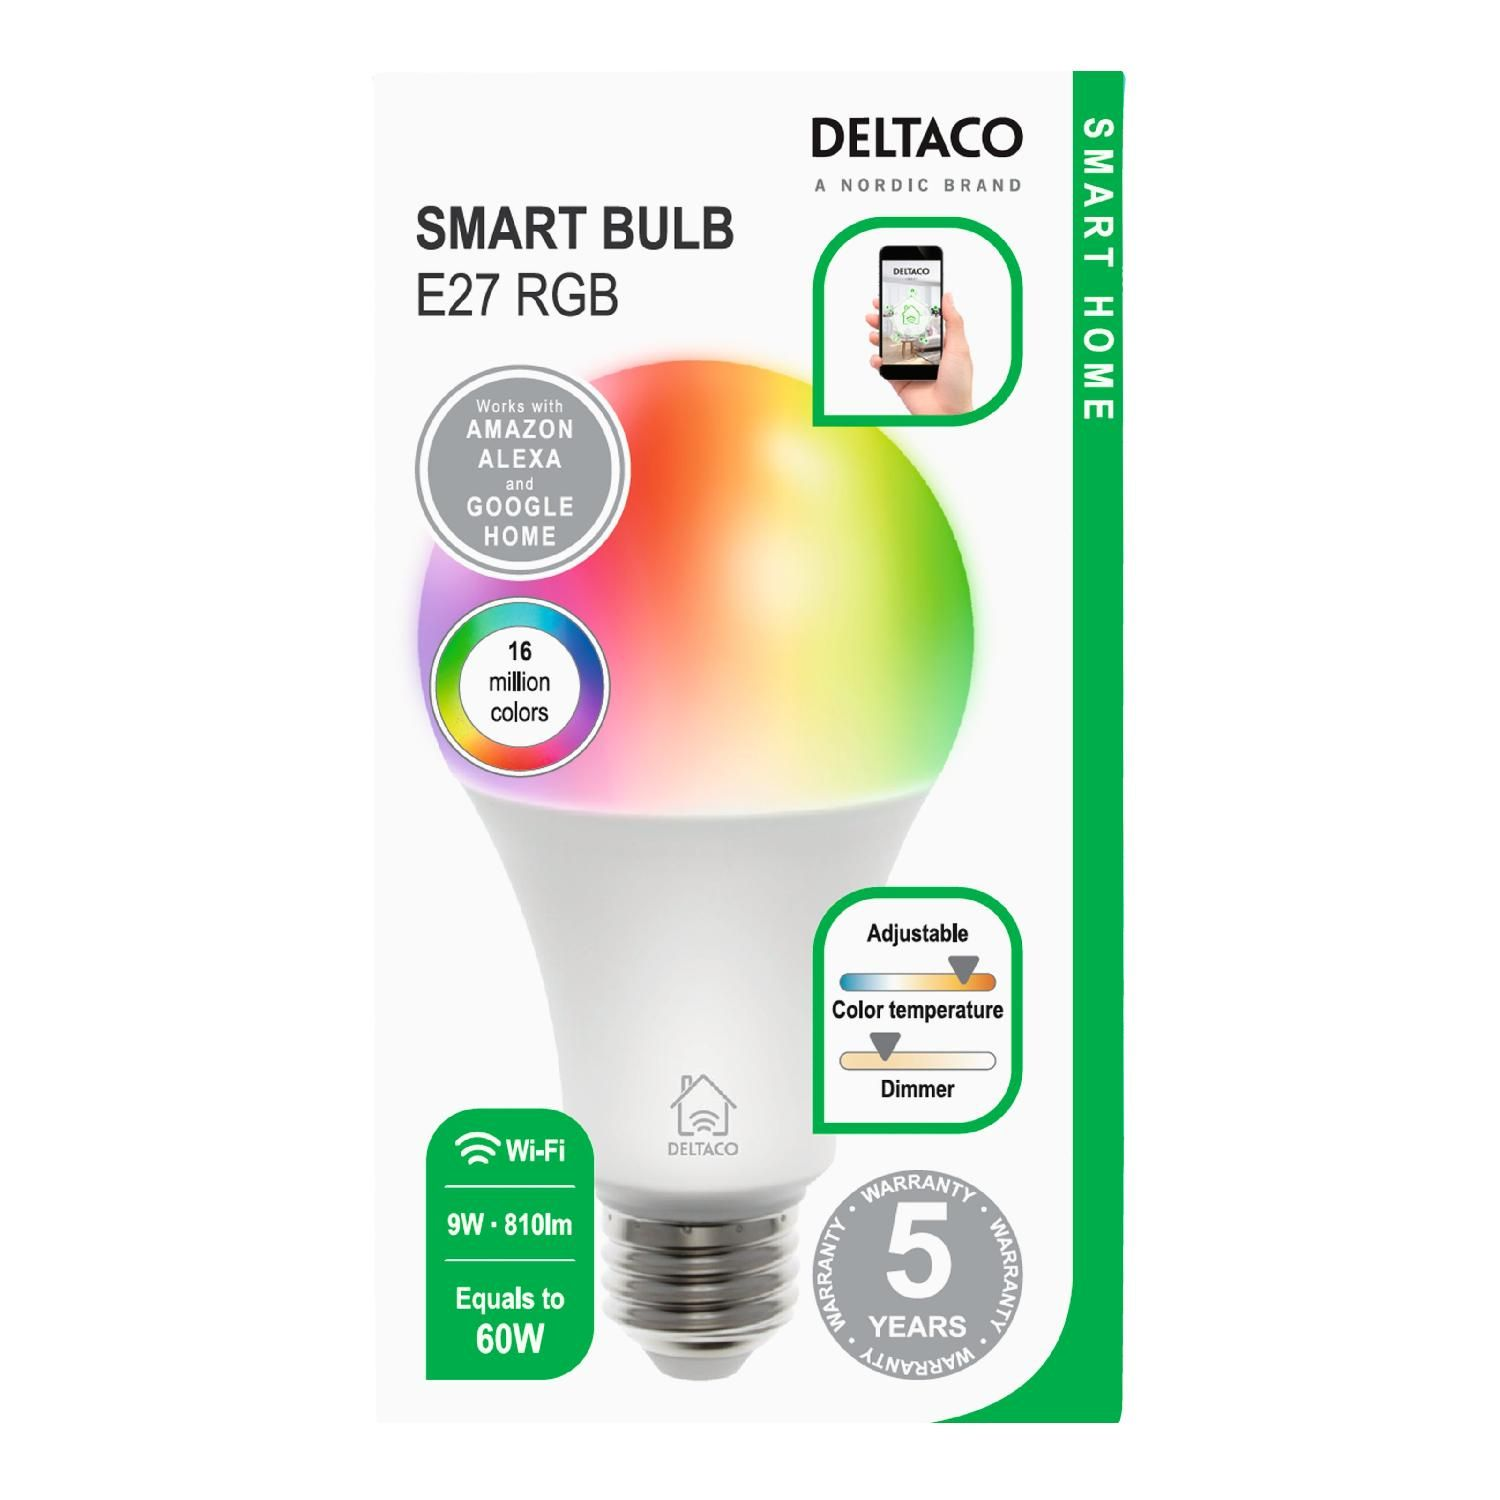 LED Glühbirne SMART warmweiß, Birne RGB smart E27 RGB Smarte DELTACO HOME